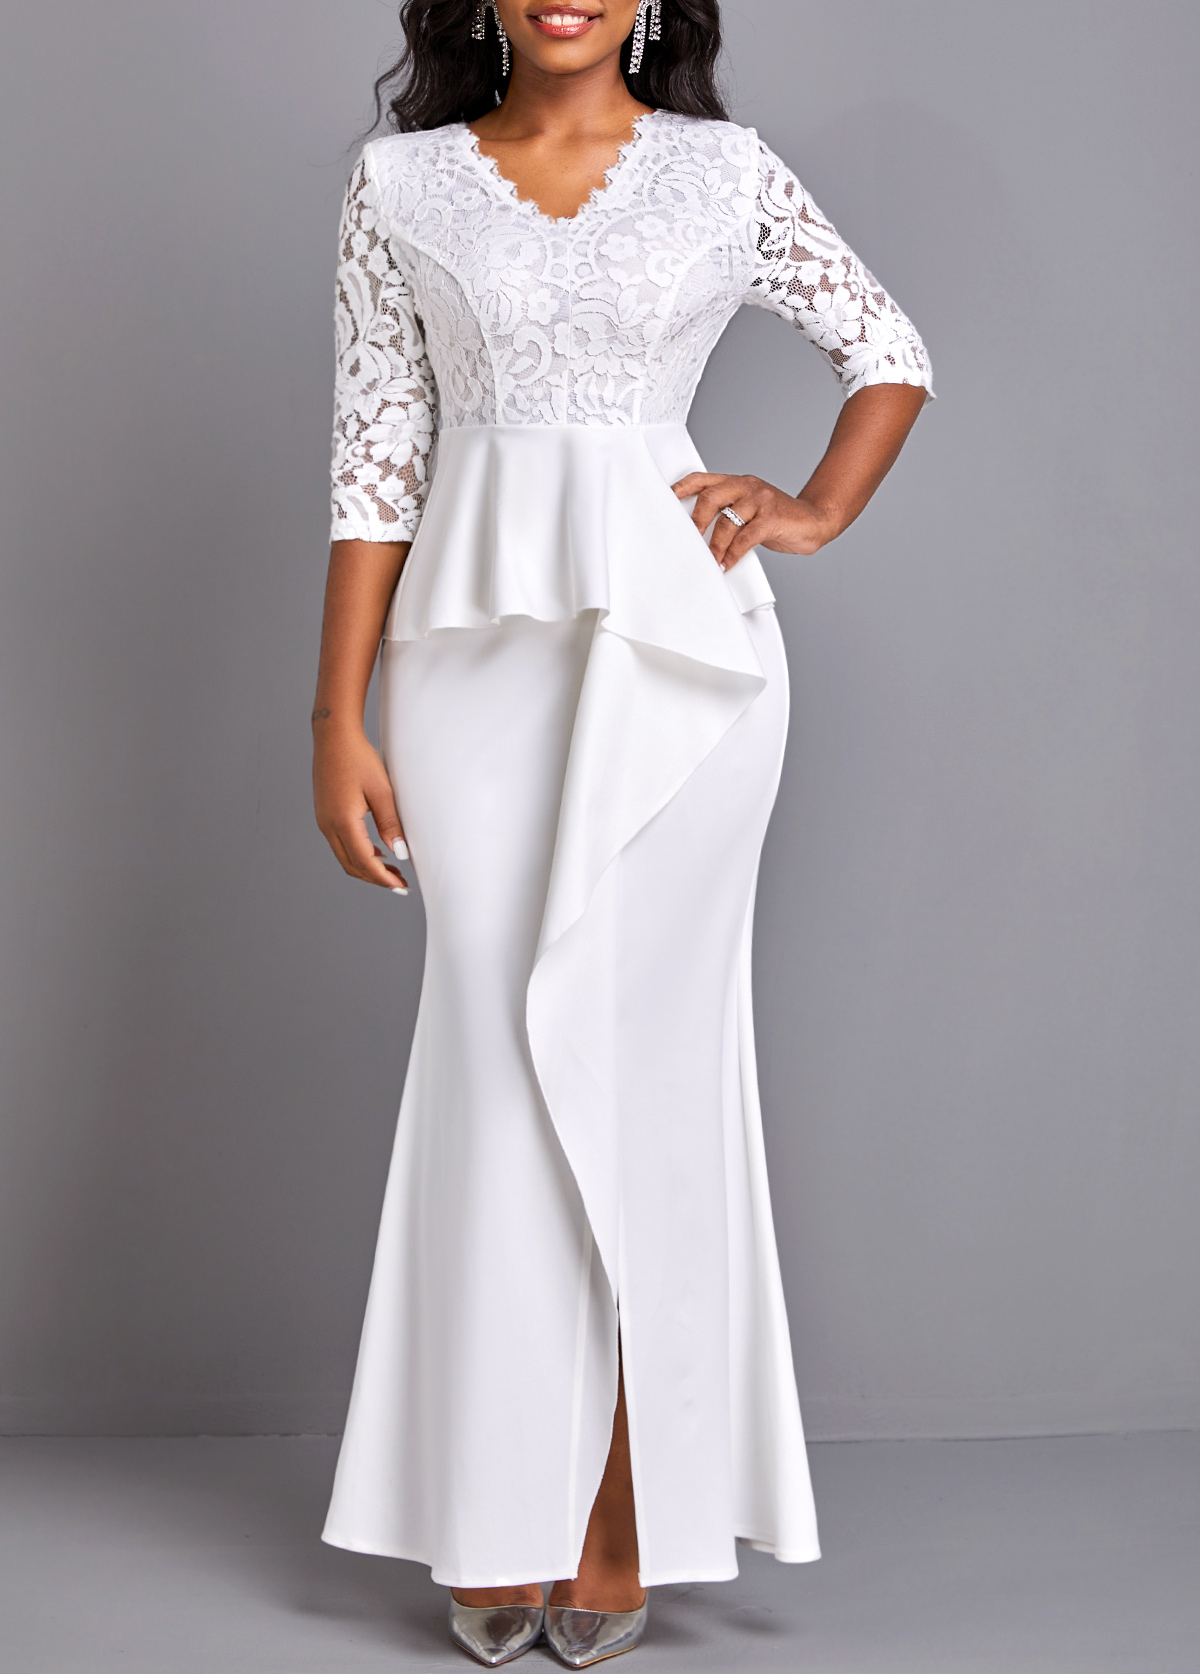 Lace Trim White Peplum Waist Maxi Dress